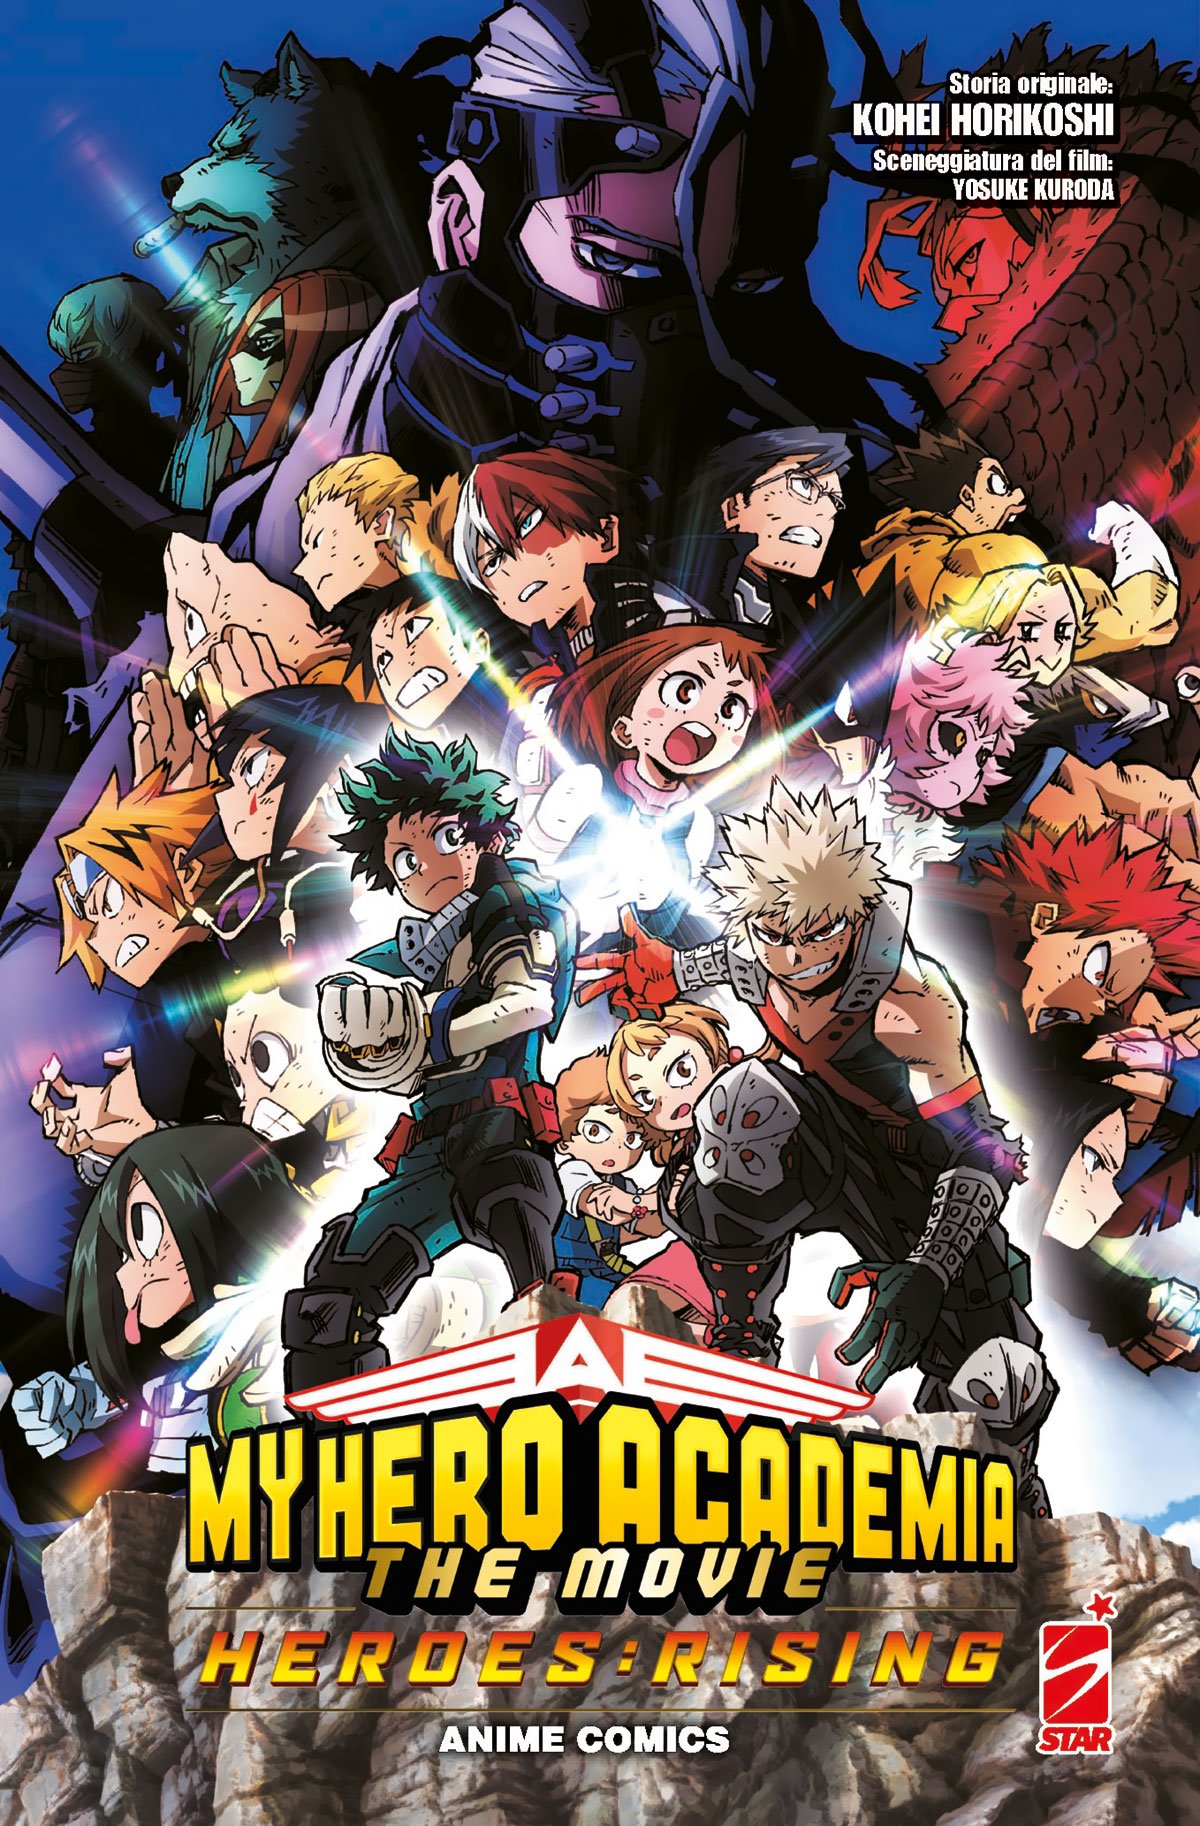 My Hero Academia - The Movie - Heroes Rising - Anime Comics, tra le uscite manga Star Comics del 23 Febbraio 2022